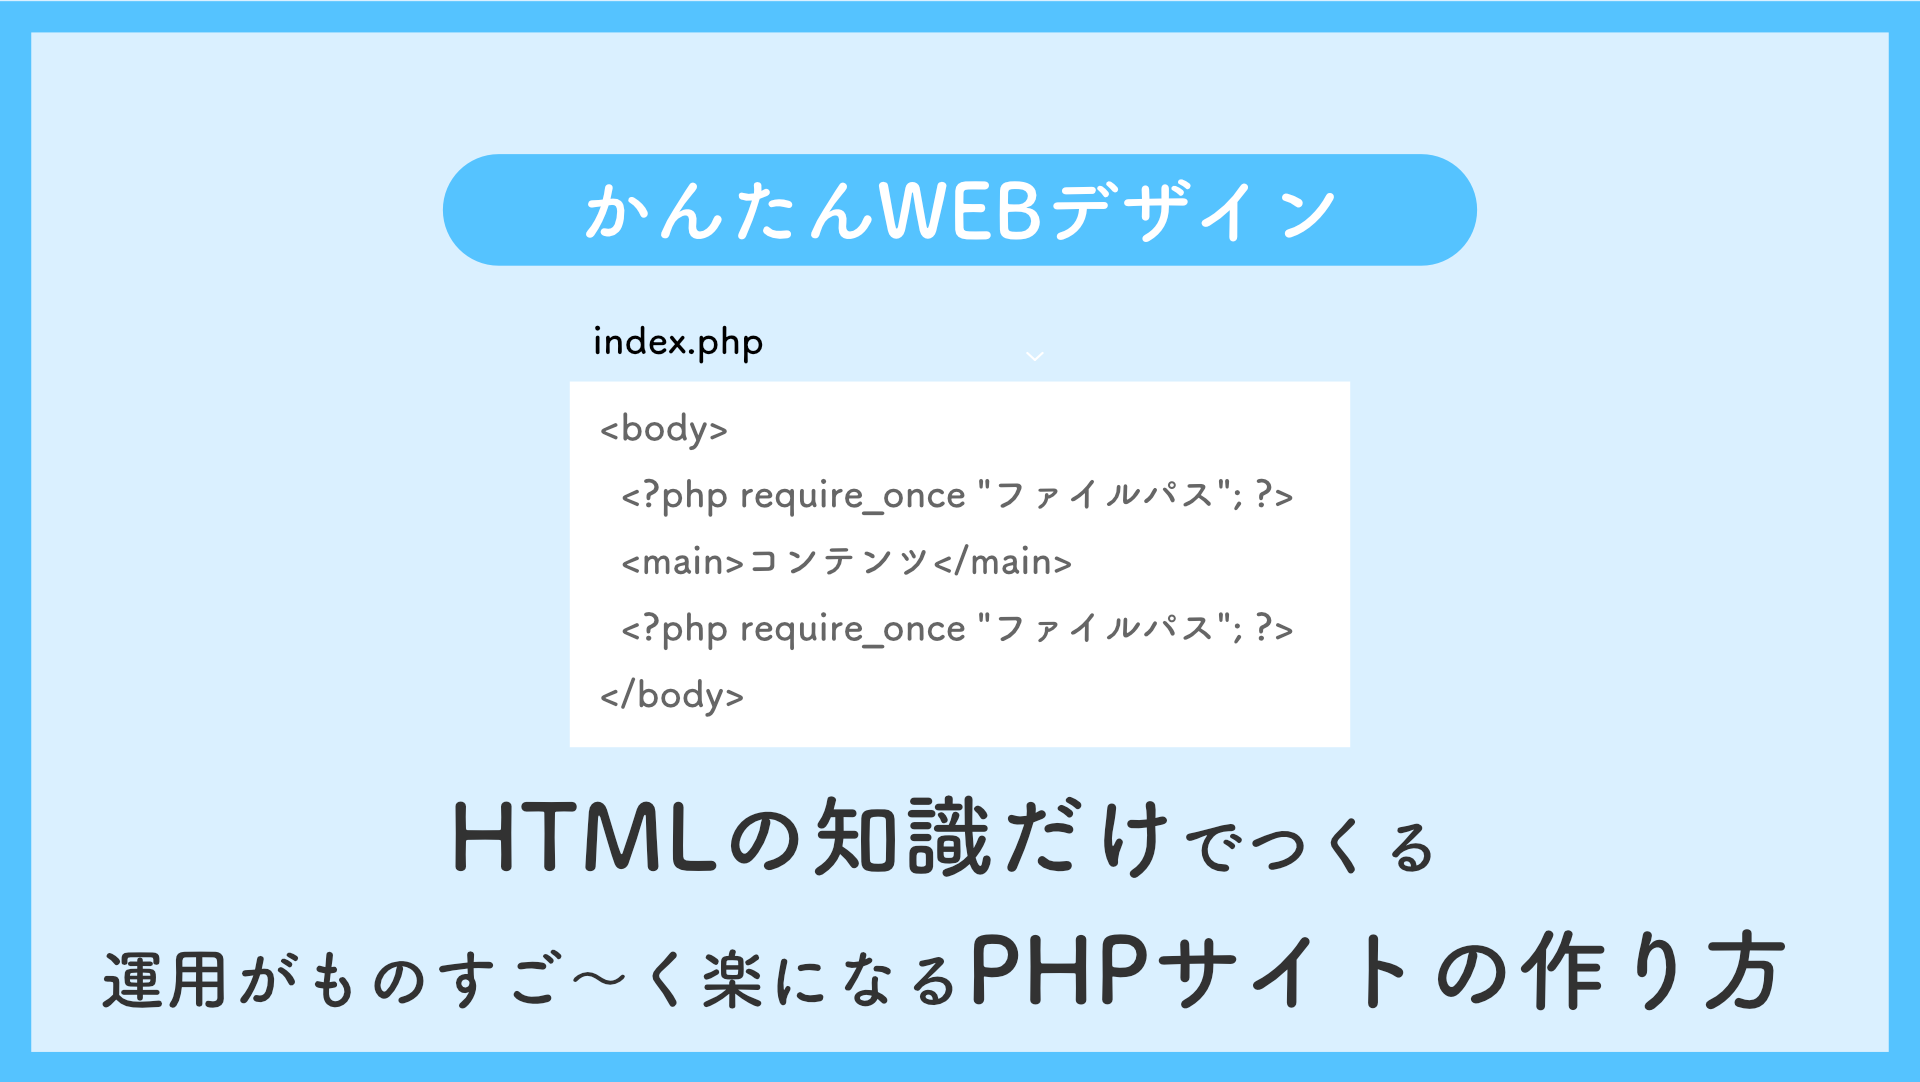 HTMLの知識だけでつくる 運用がものすご〜く楽になるPHPサイトの作り方